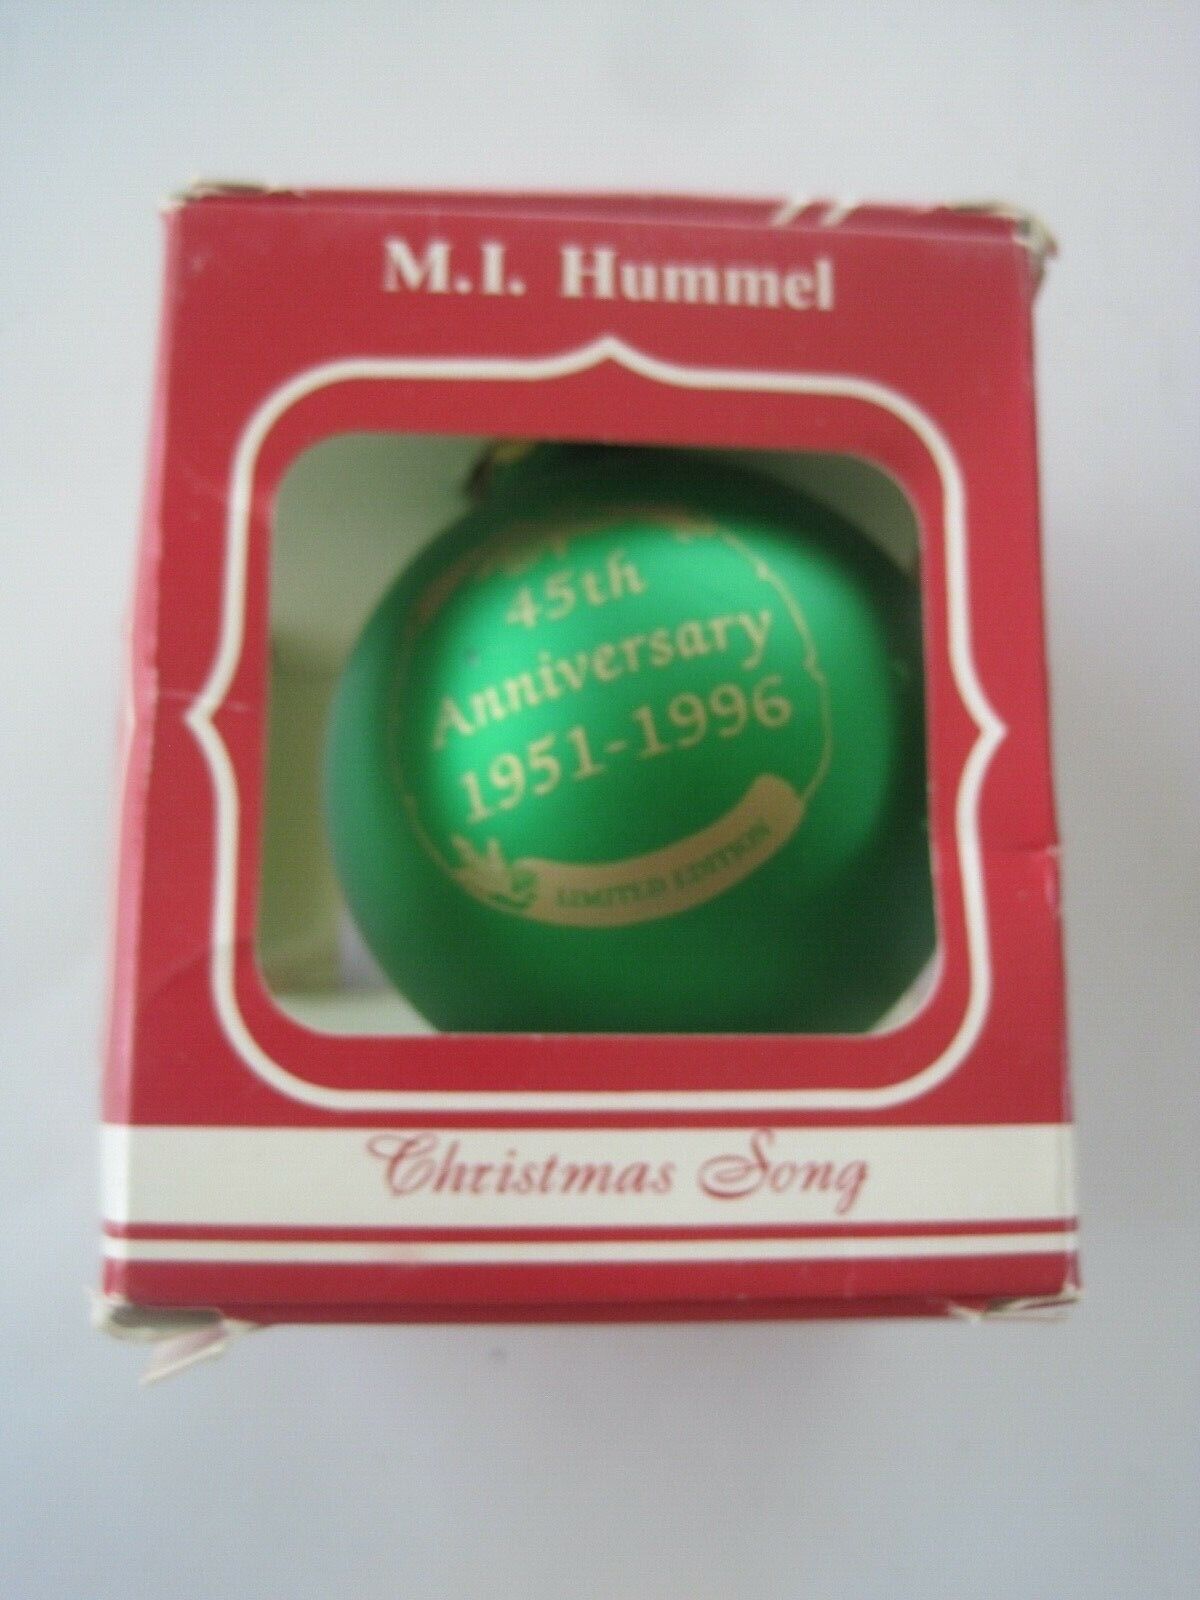 M. I. Hummel 45th Anniversary 1951-1996 